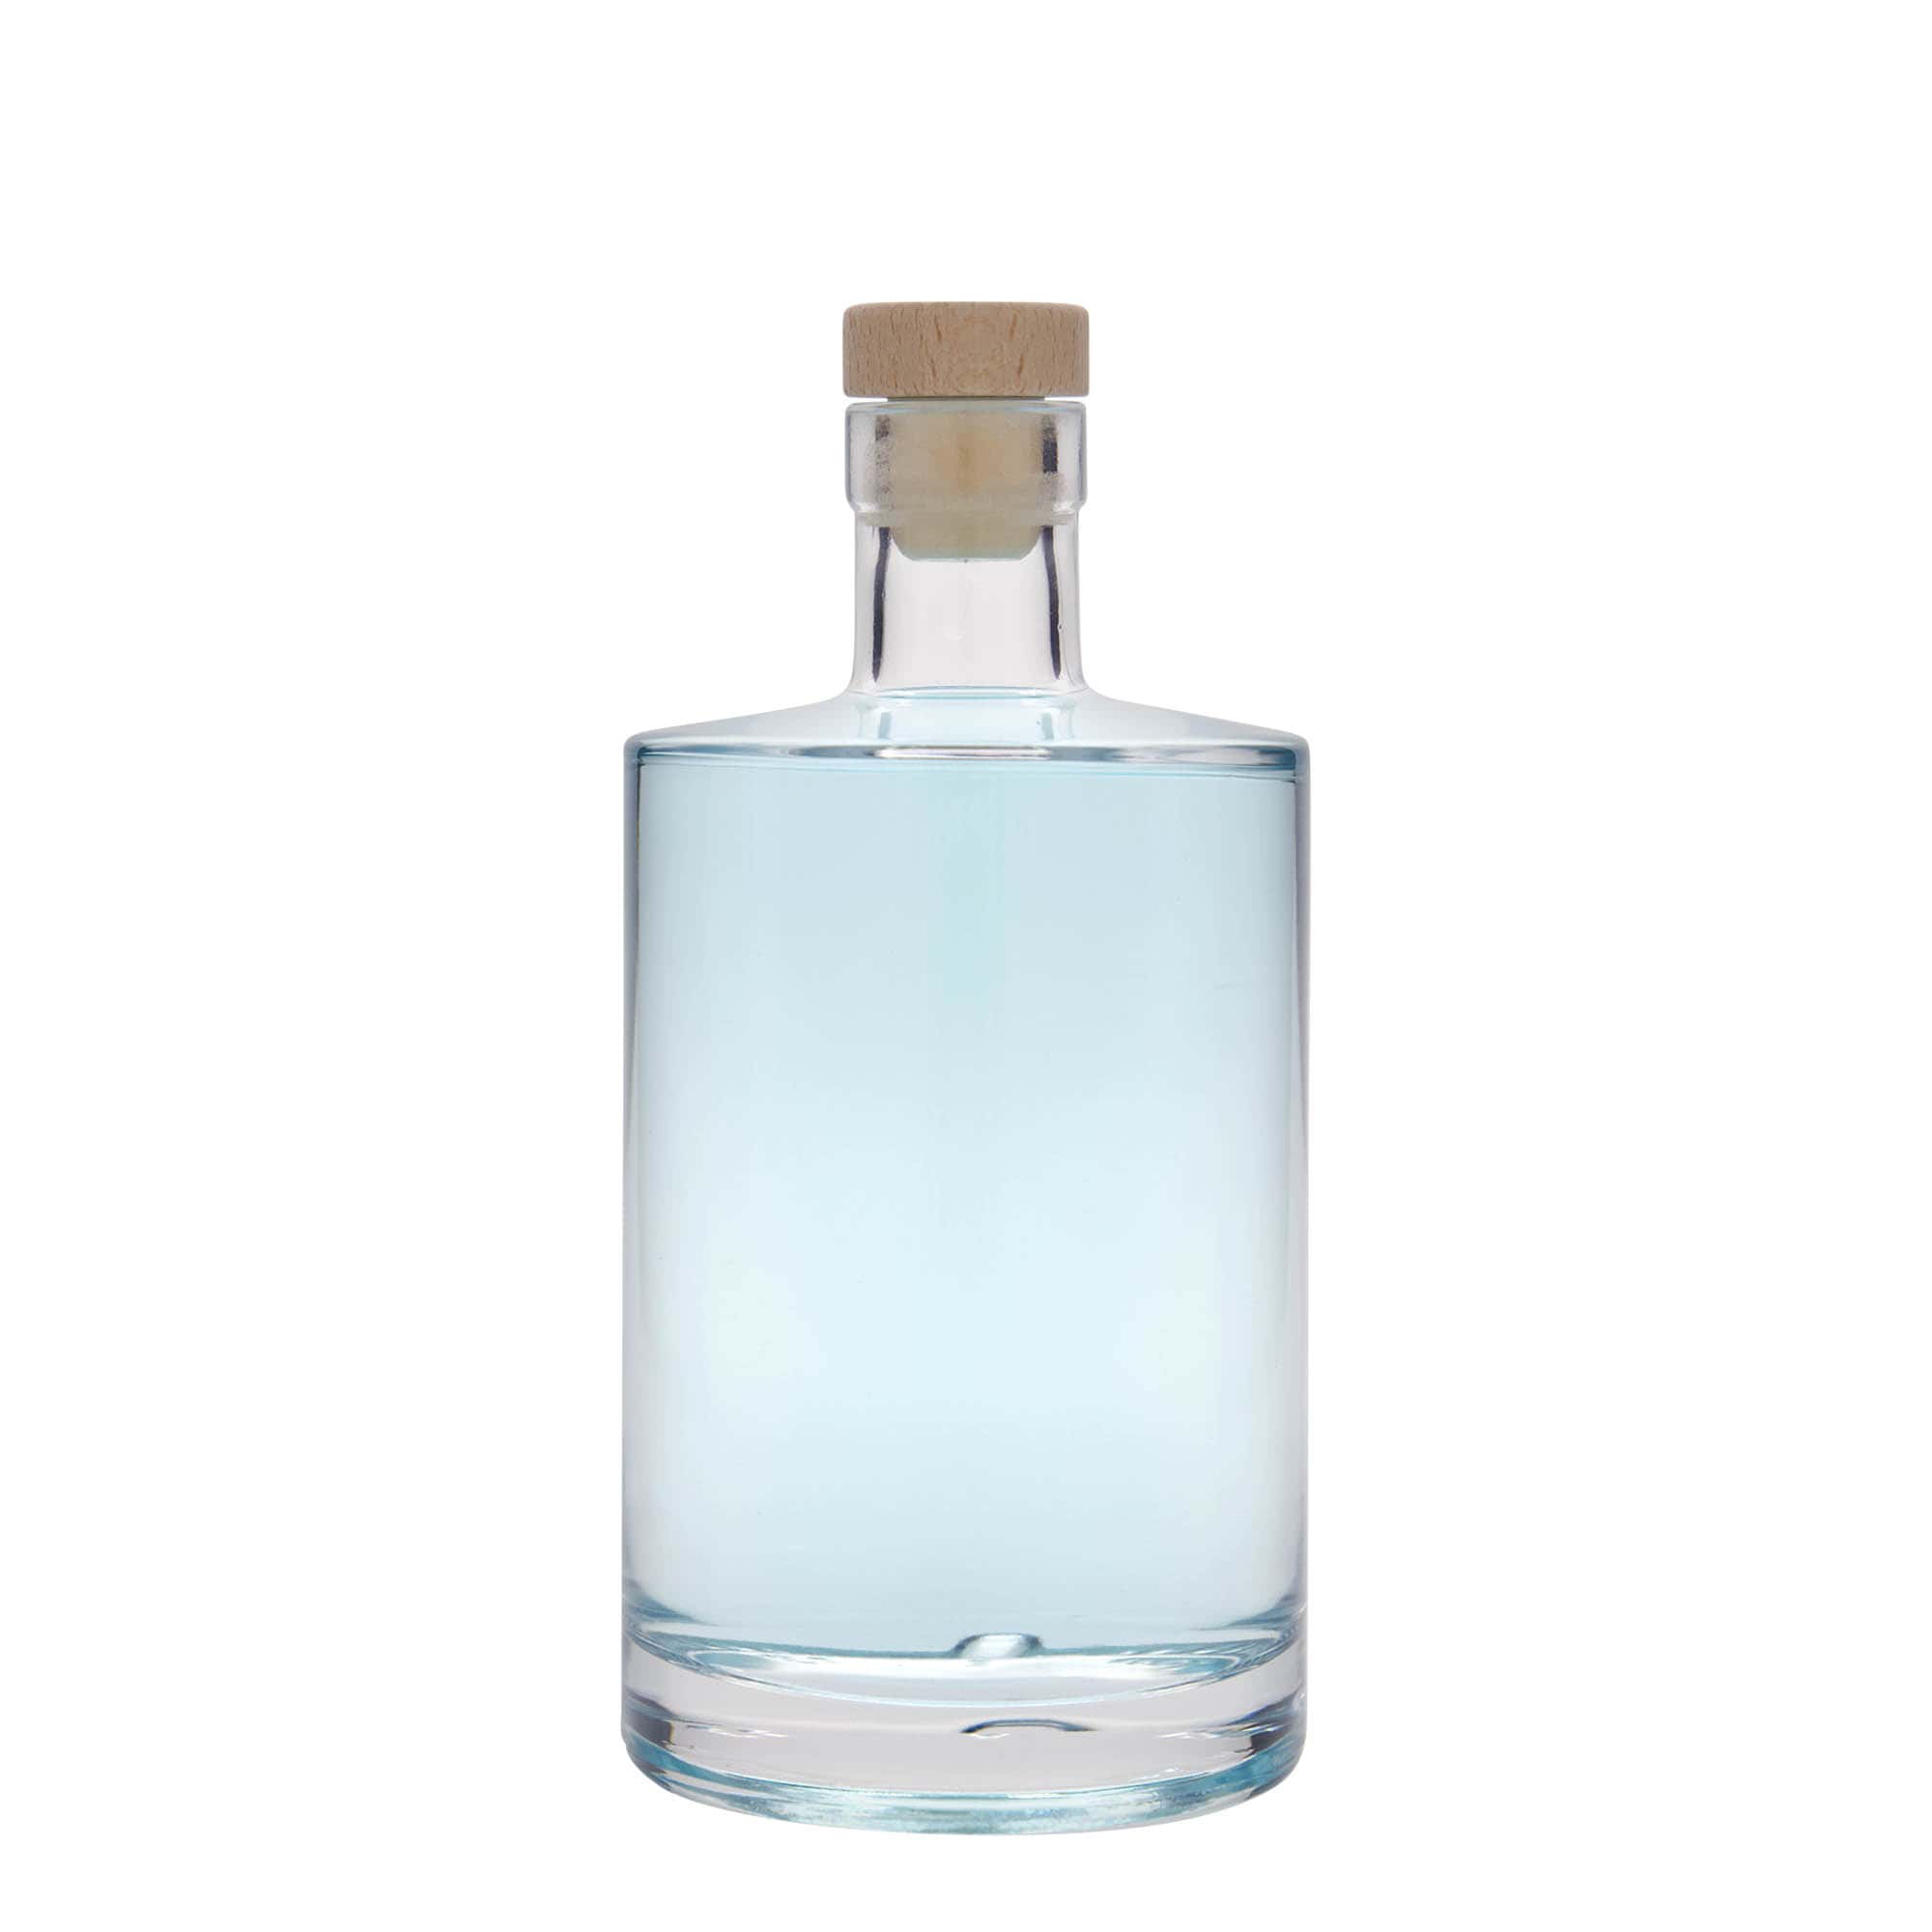 700 ml glass bottle 'Aventura', closure: cork